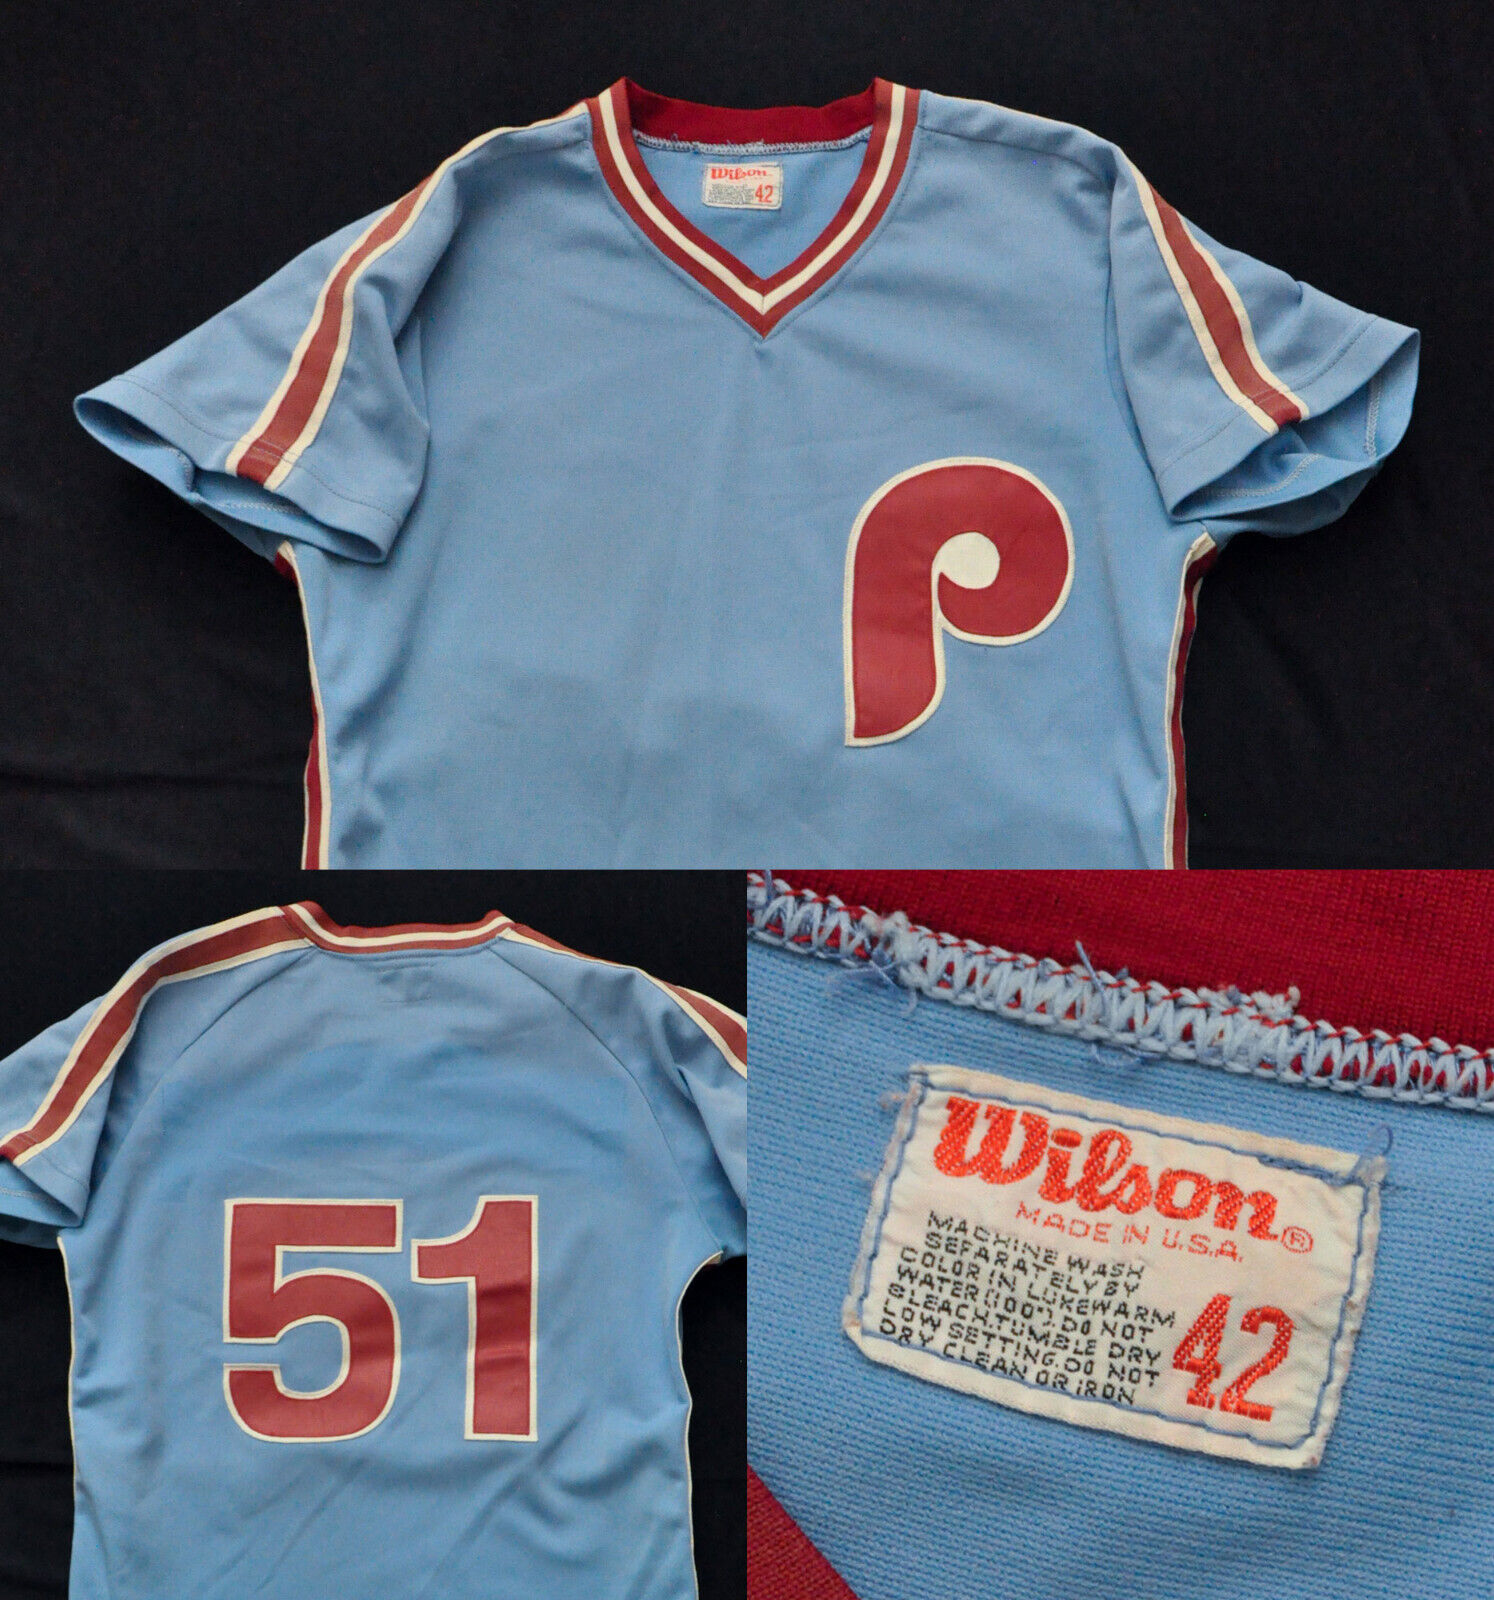 70s phillies jersey